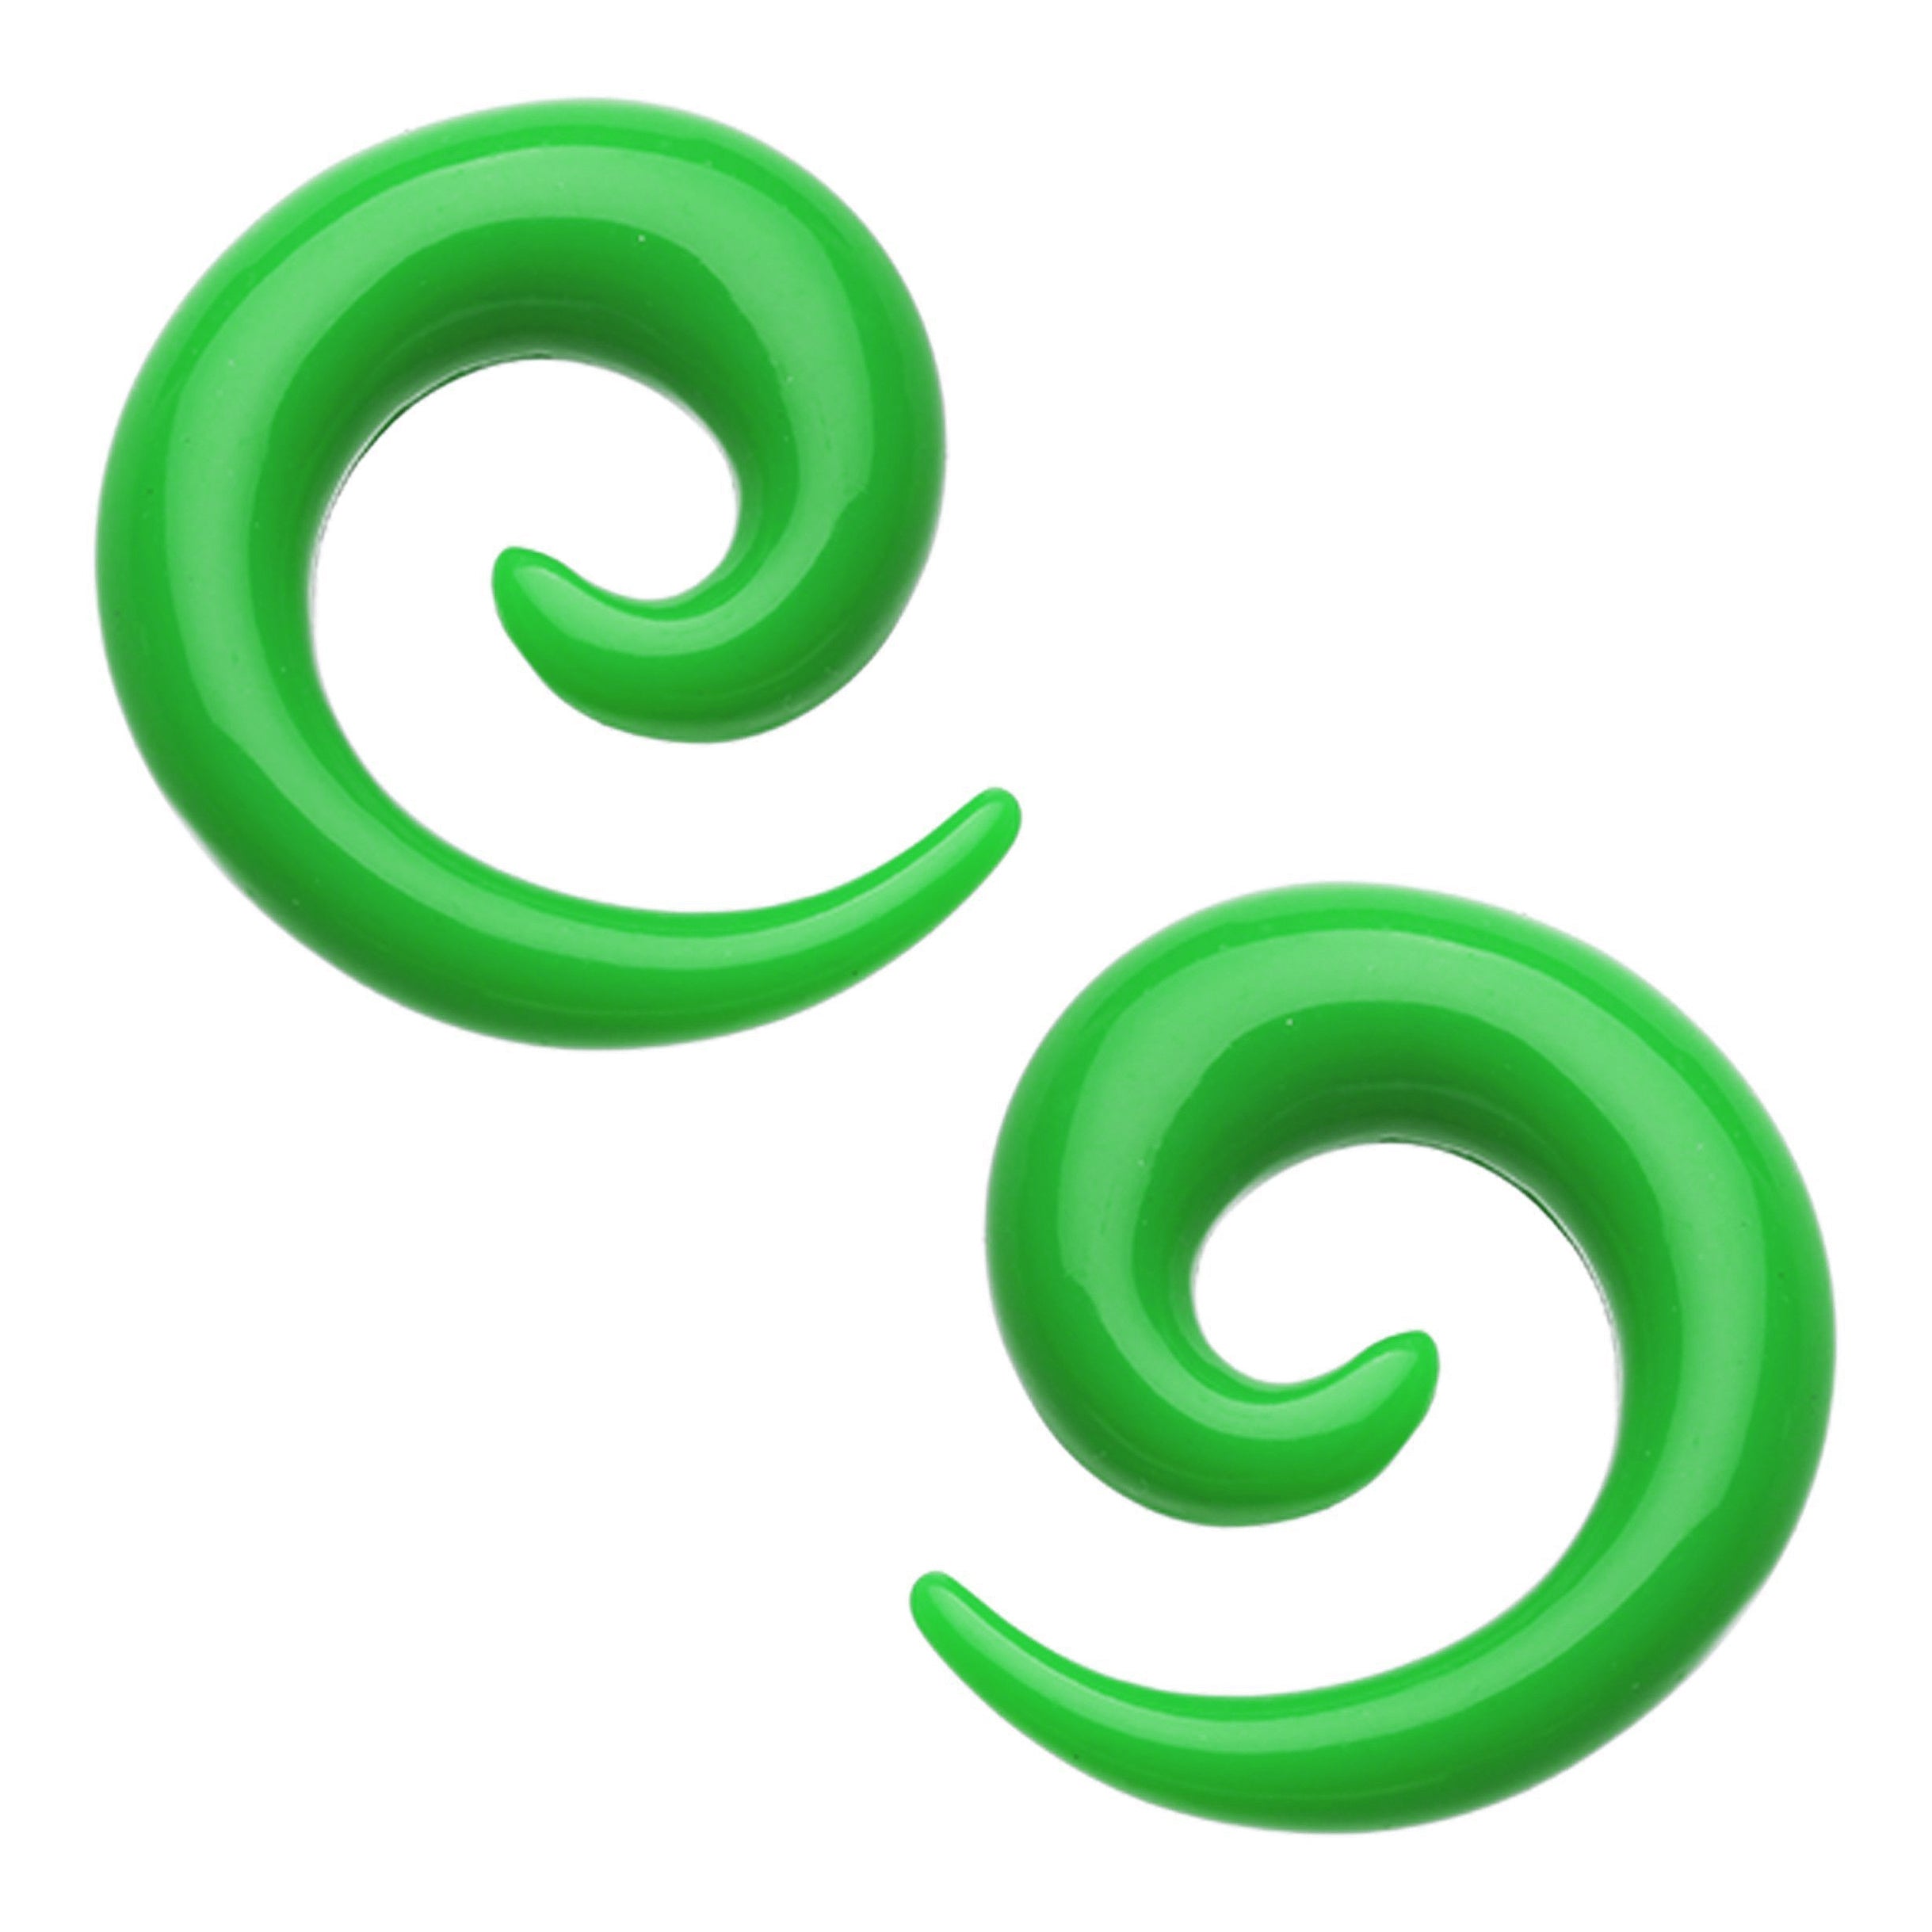 Green Acrylic Spirals Plugs 6 gauge (4mm) Green